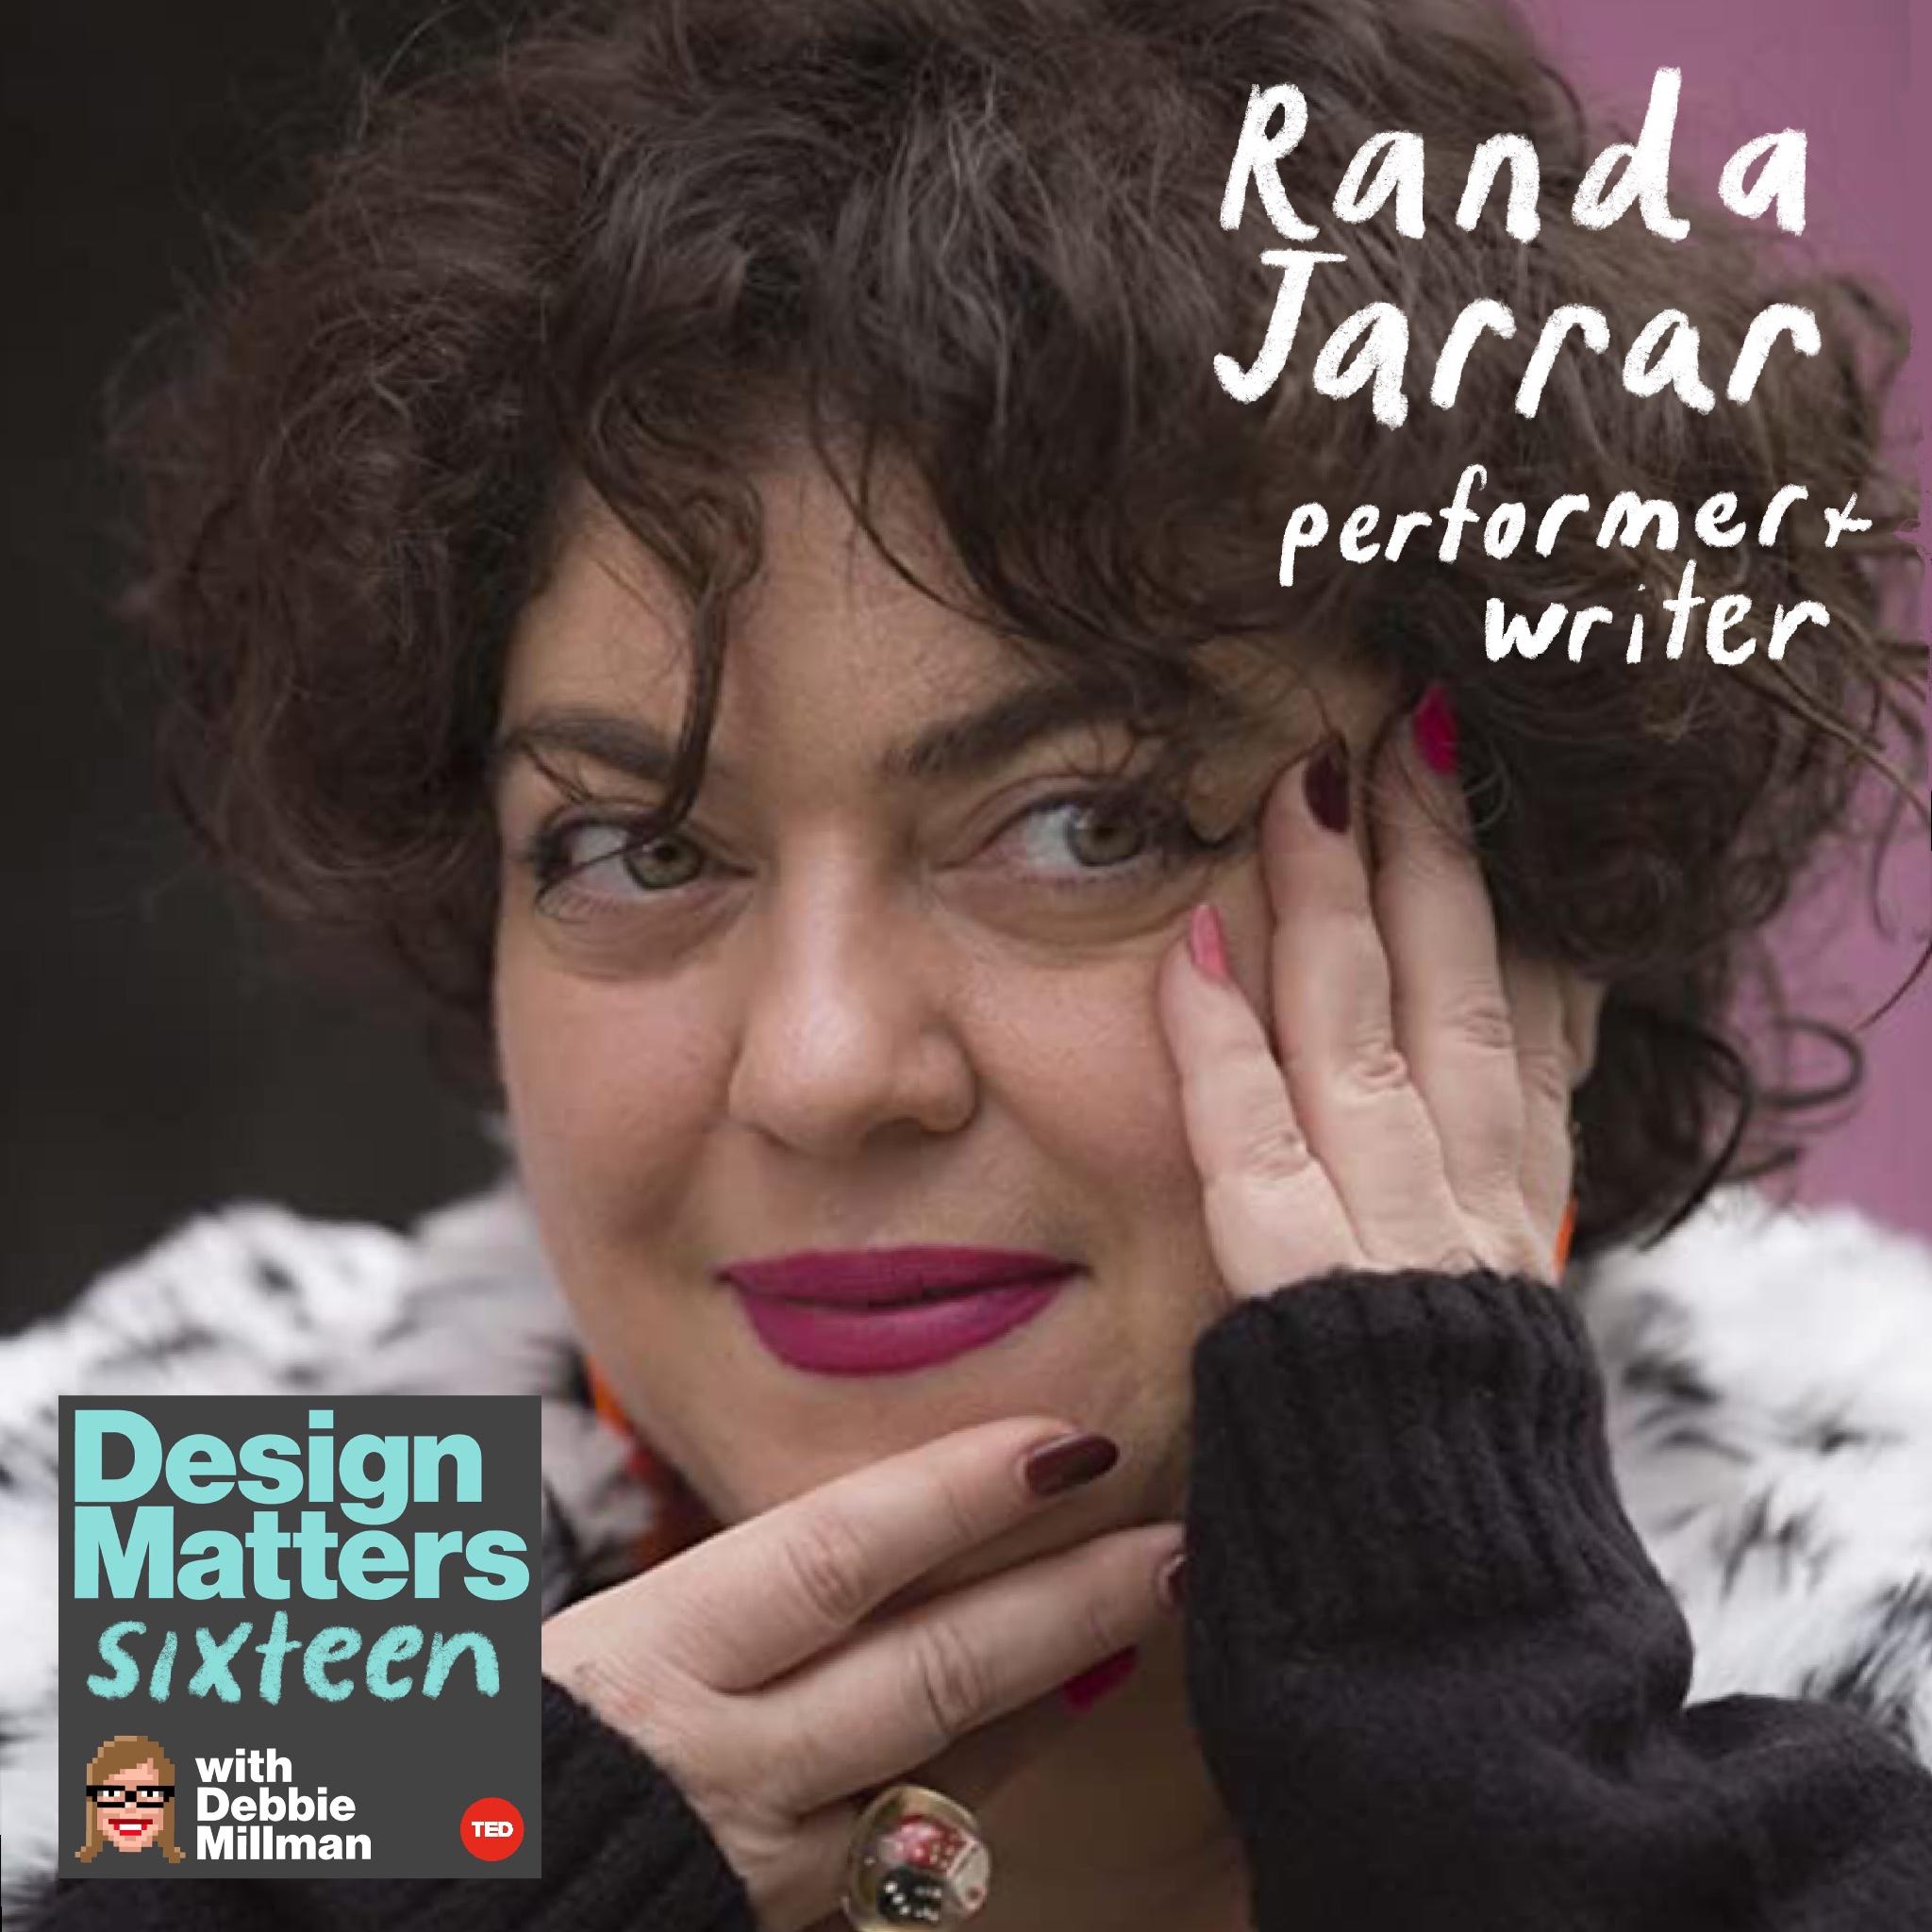 Thumbnail for "Randa Jarrar".